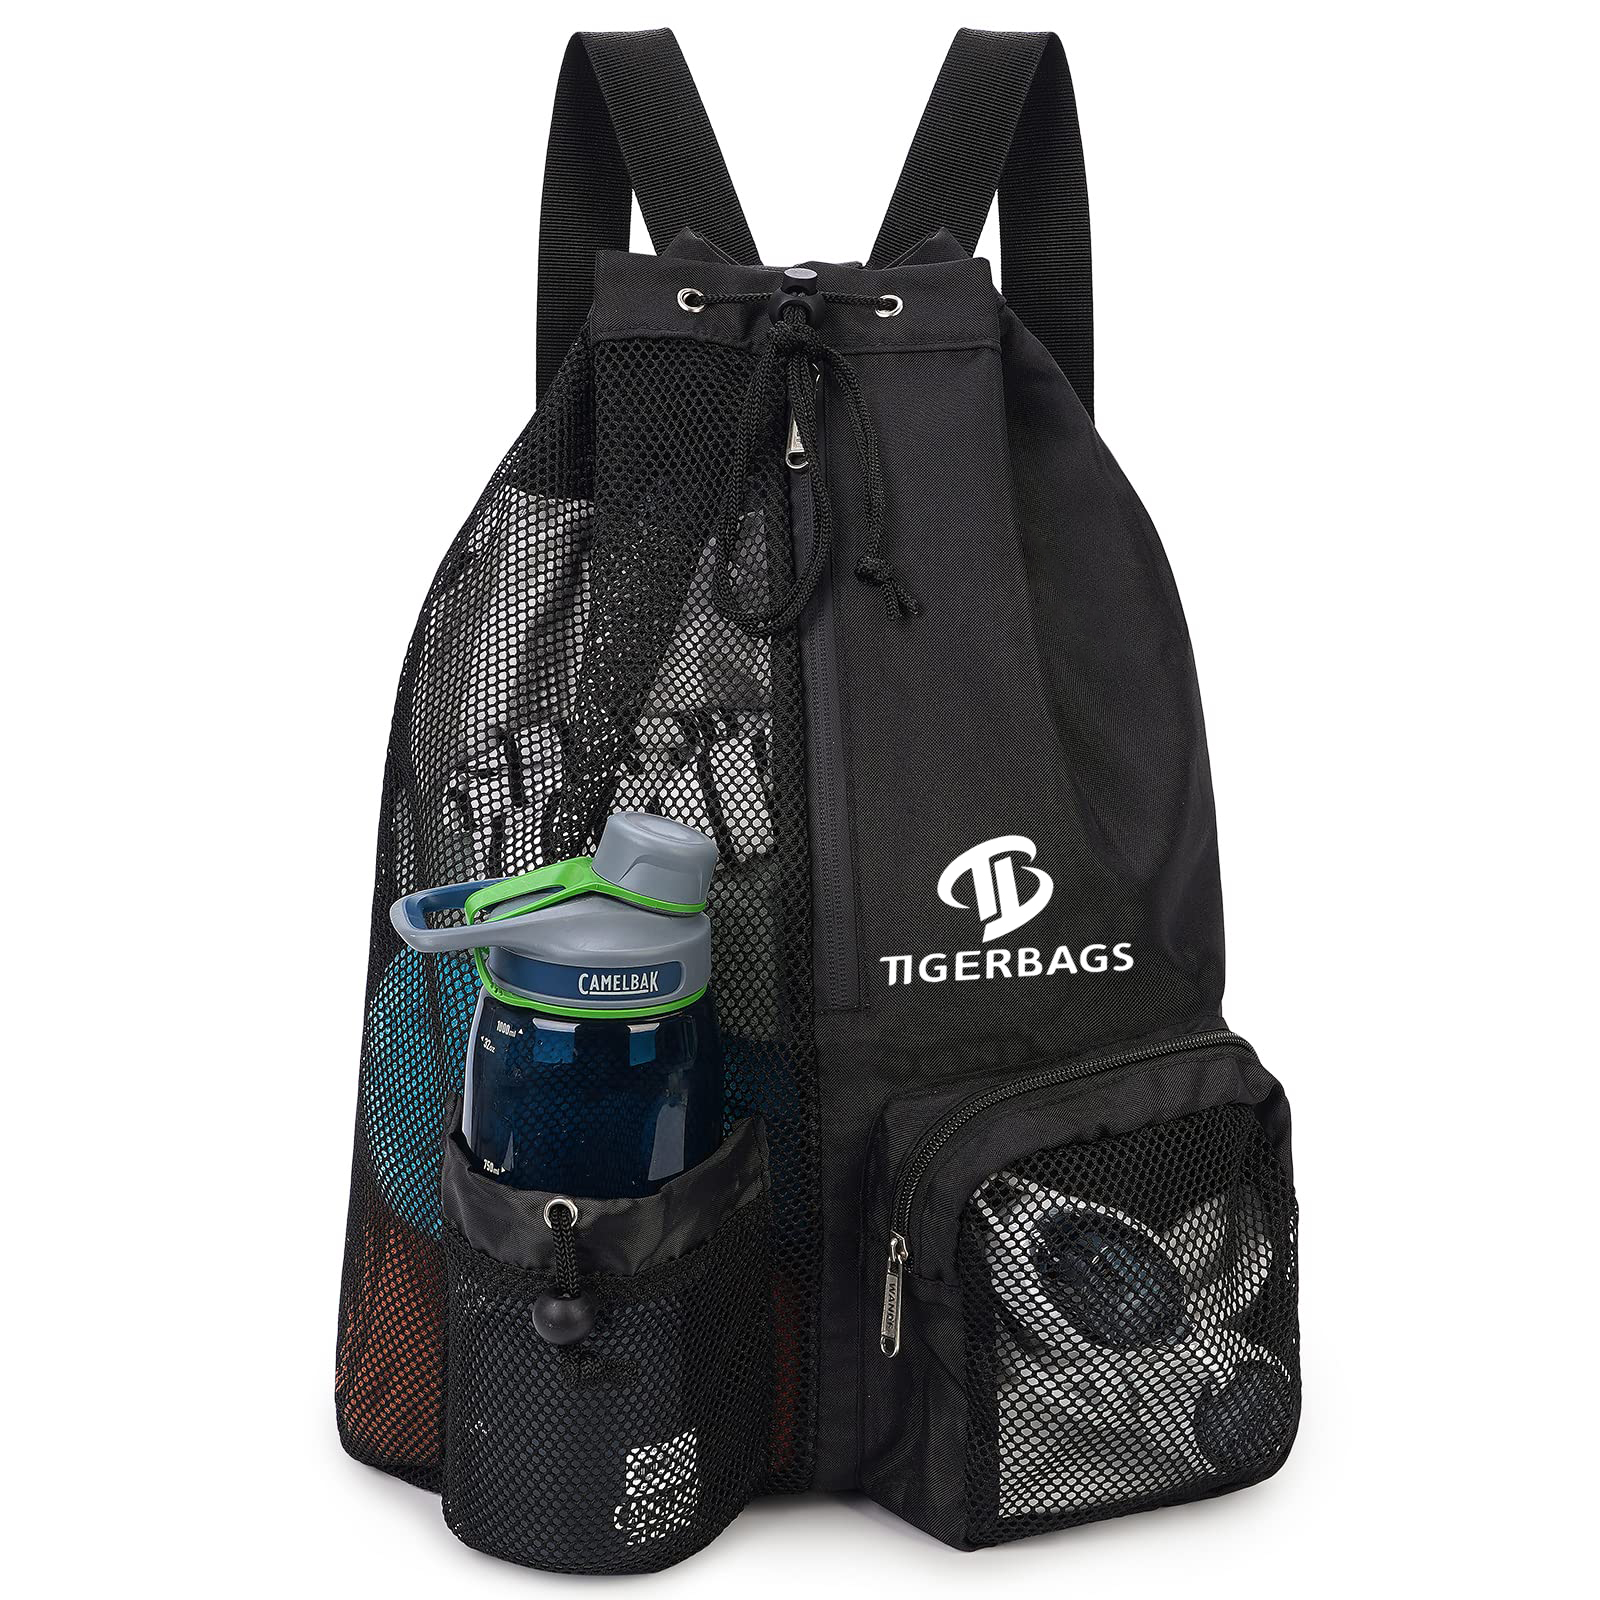 Swimming bag mesh pull rope backpack waterproof durable bag